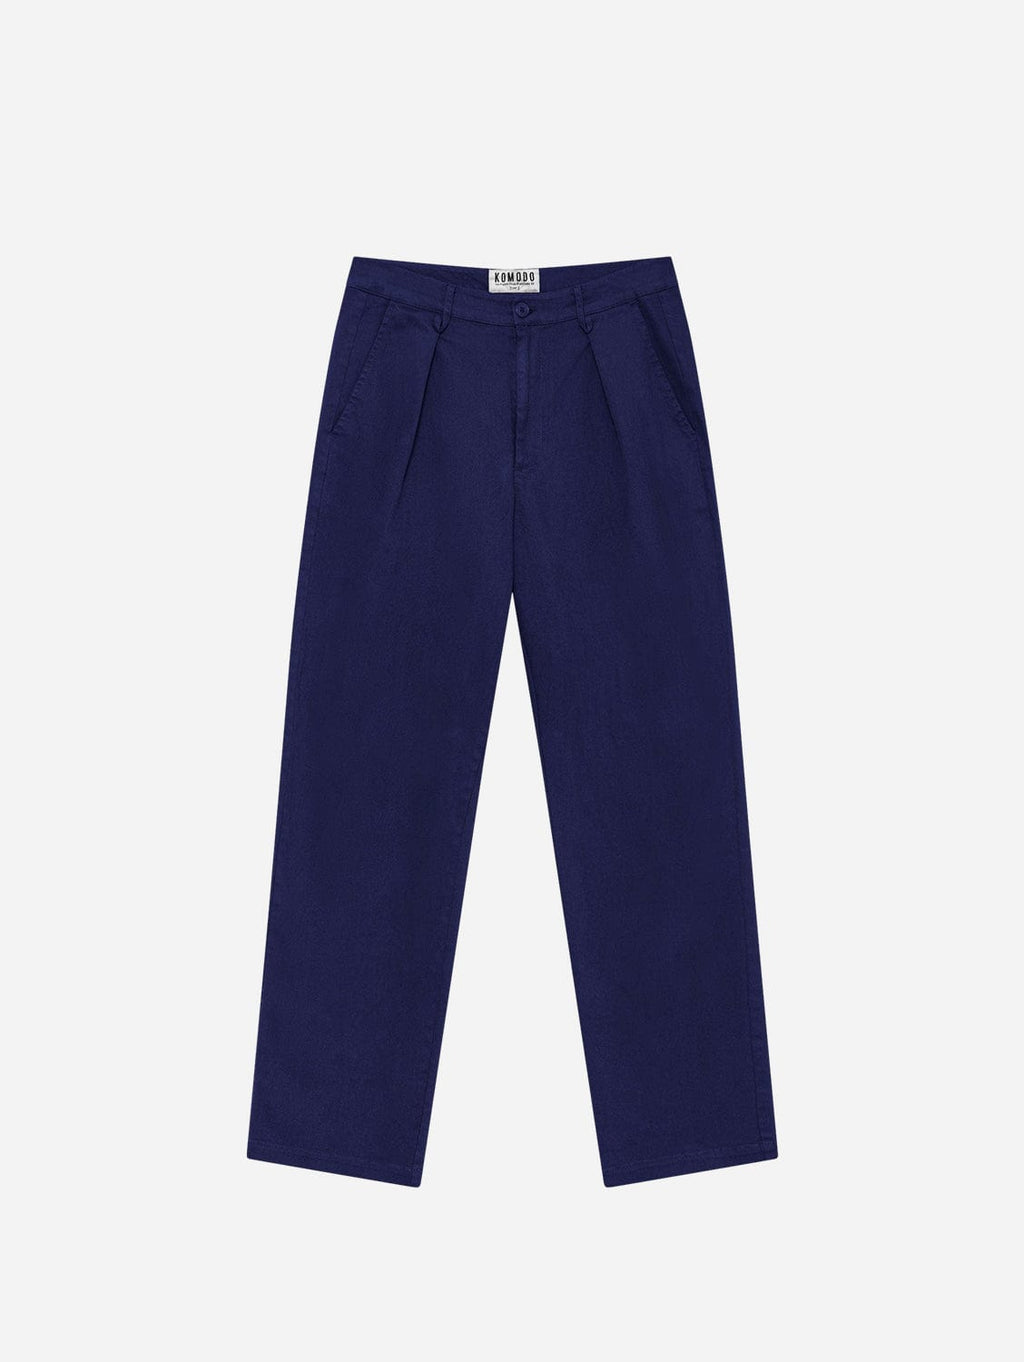 RYRJJ Womens Cotton Linen Solid Elastic High Waist Wide Leg Slit Pants  Summer Casual Single-Breasted Loose Pockets Trousers(Gray,XL) - Walmart.com